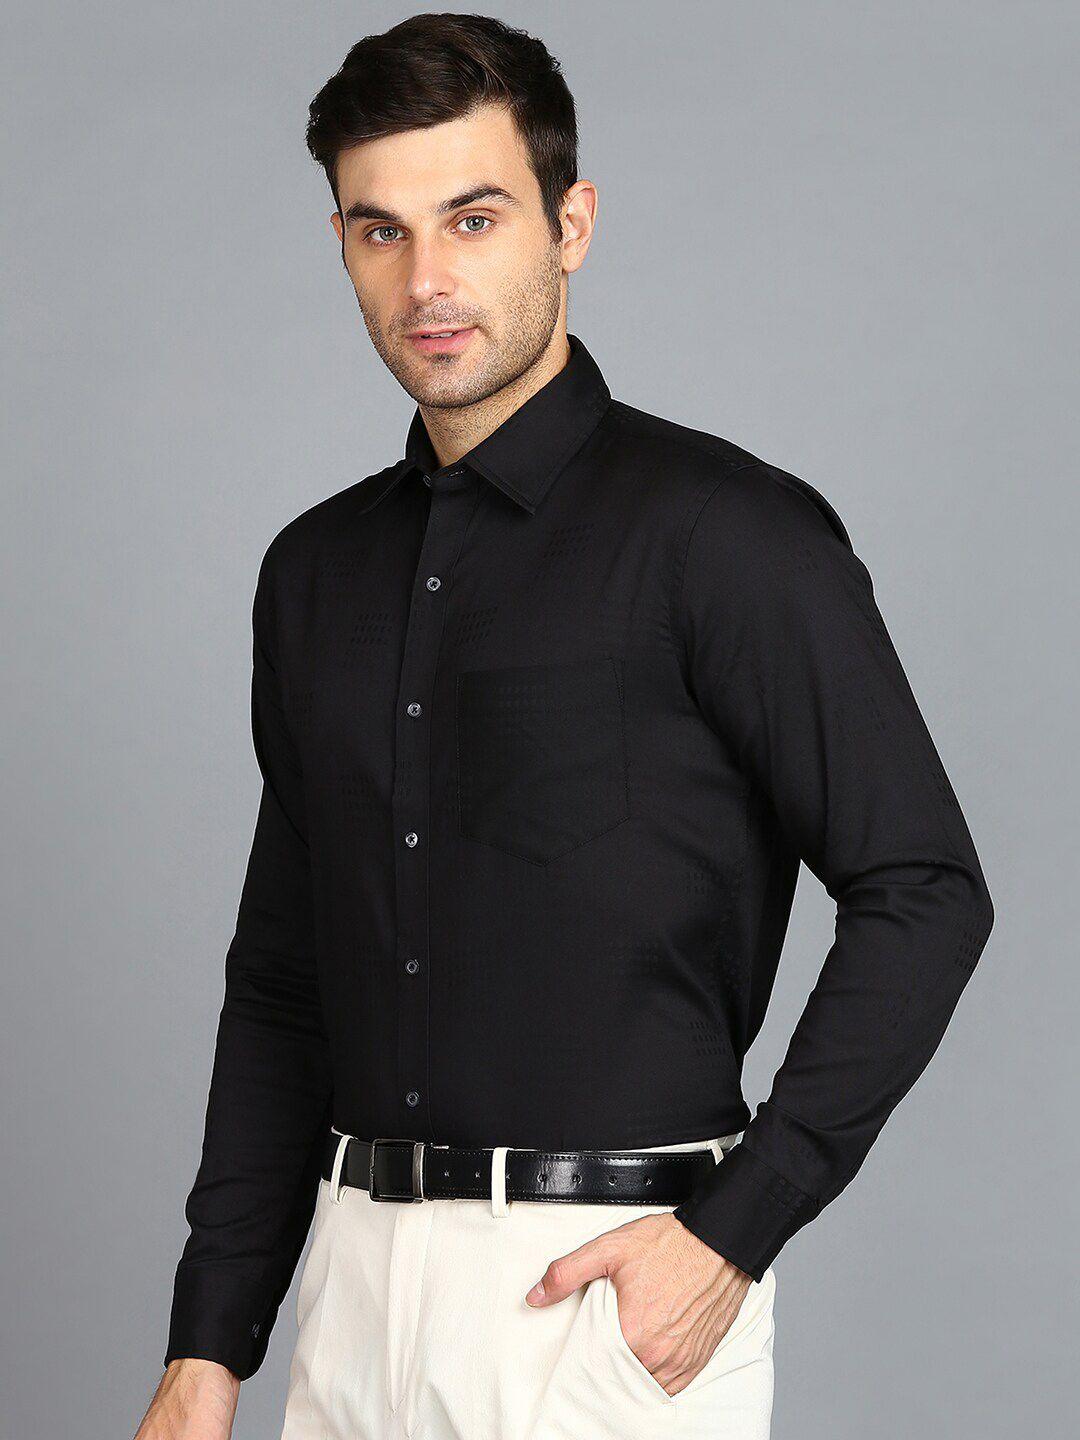 znx clothing men black premium opaque formal shirt